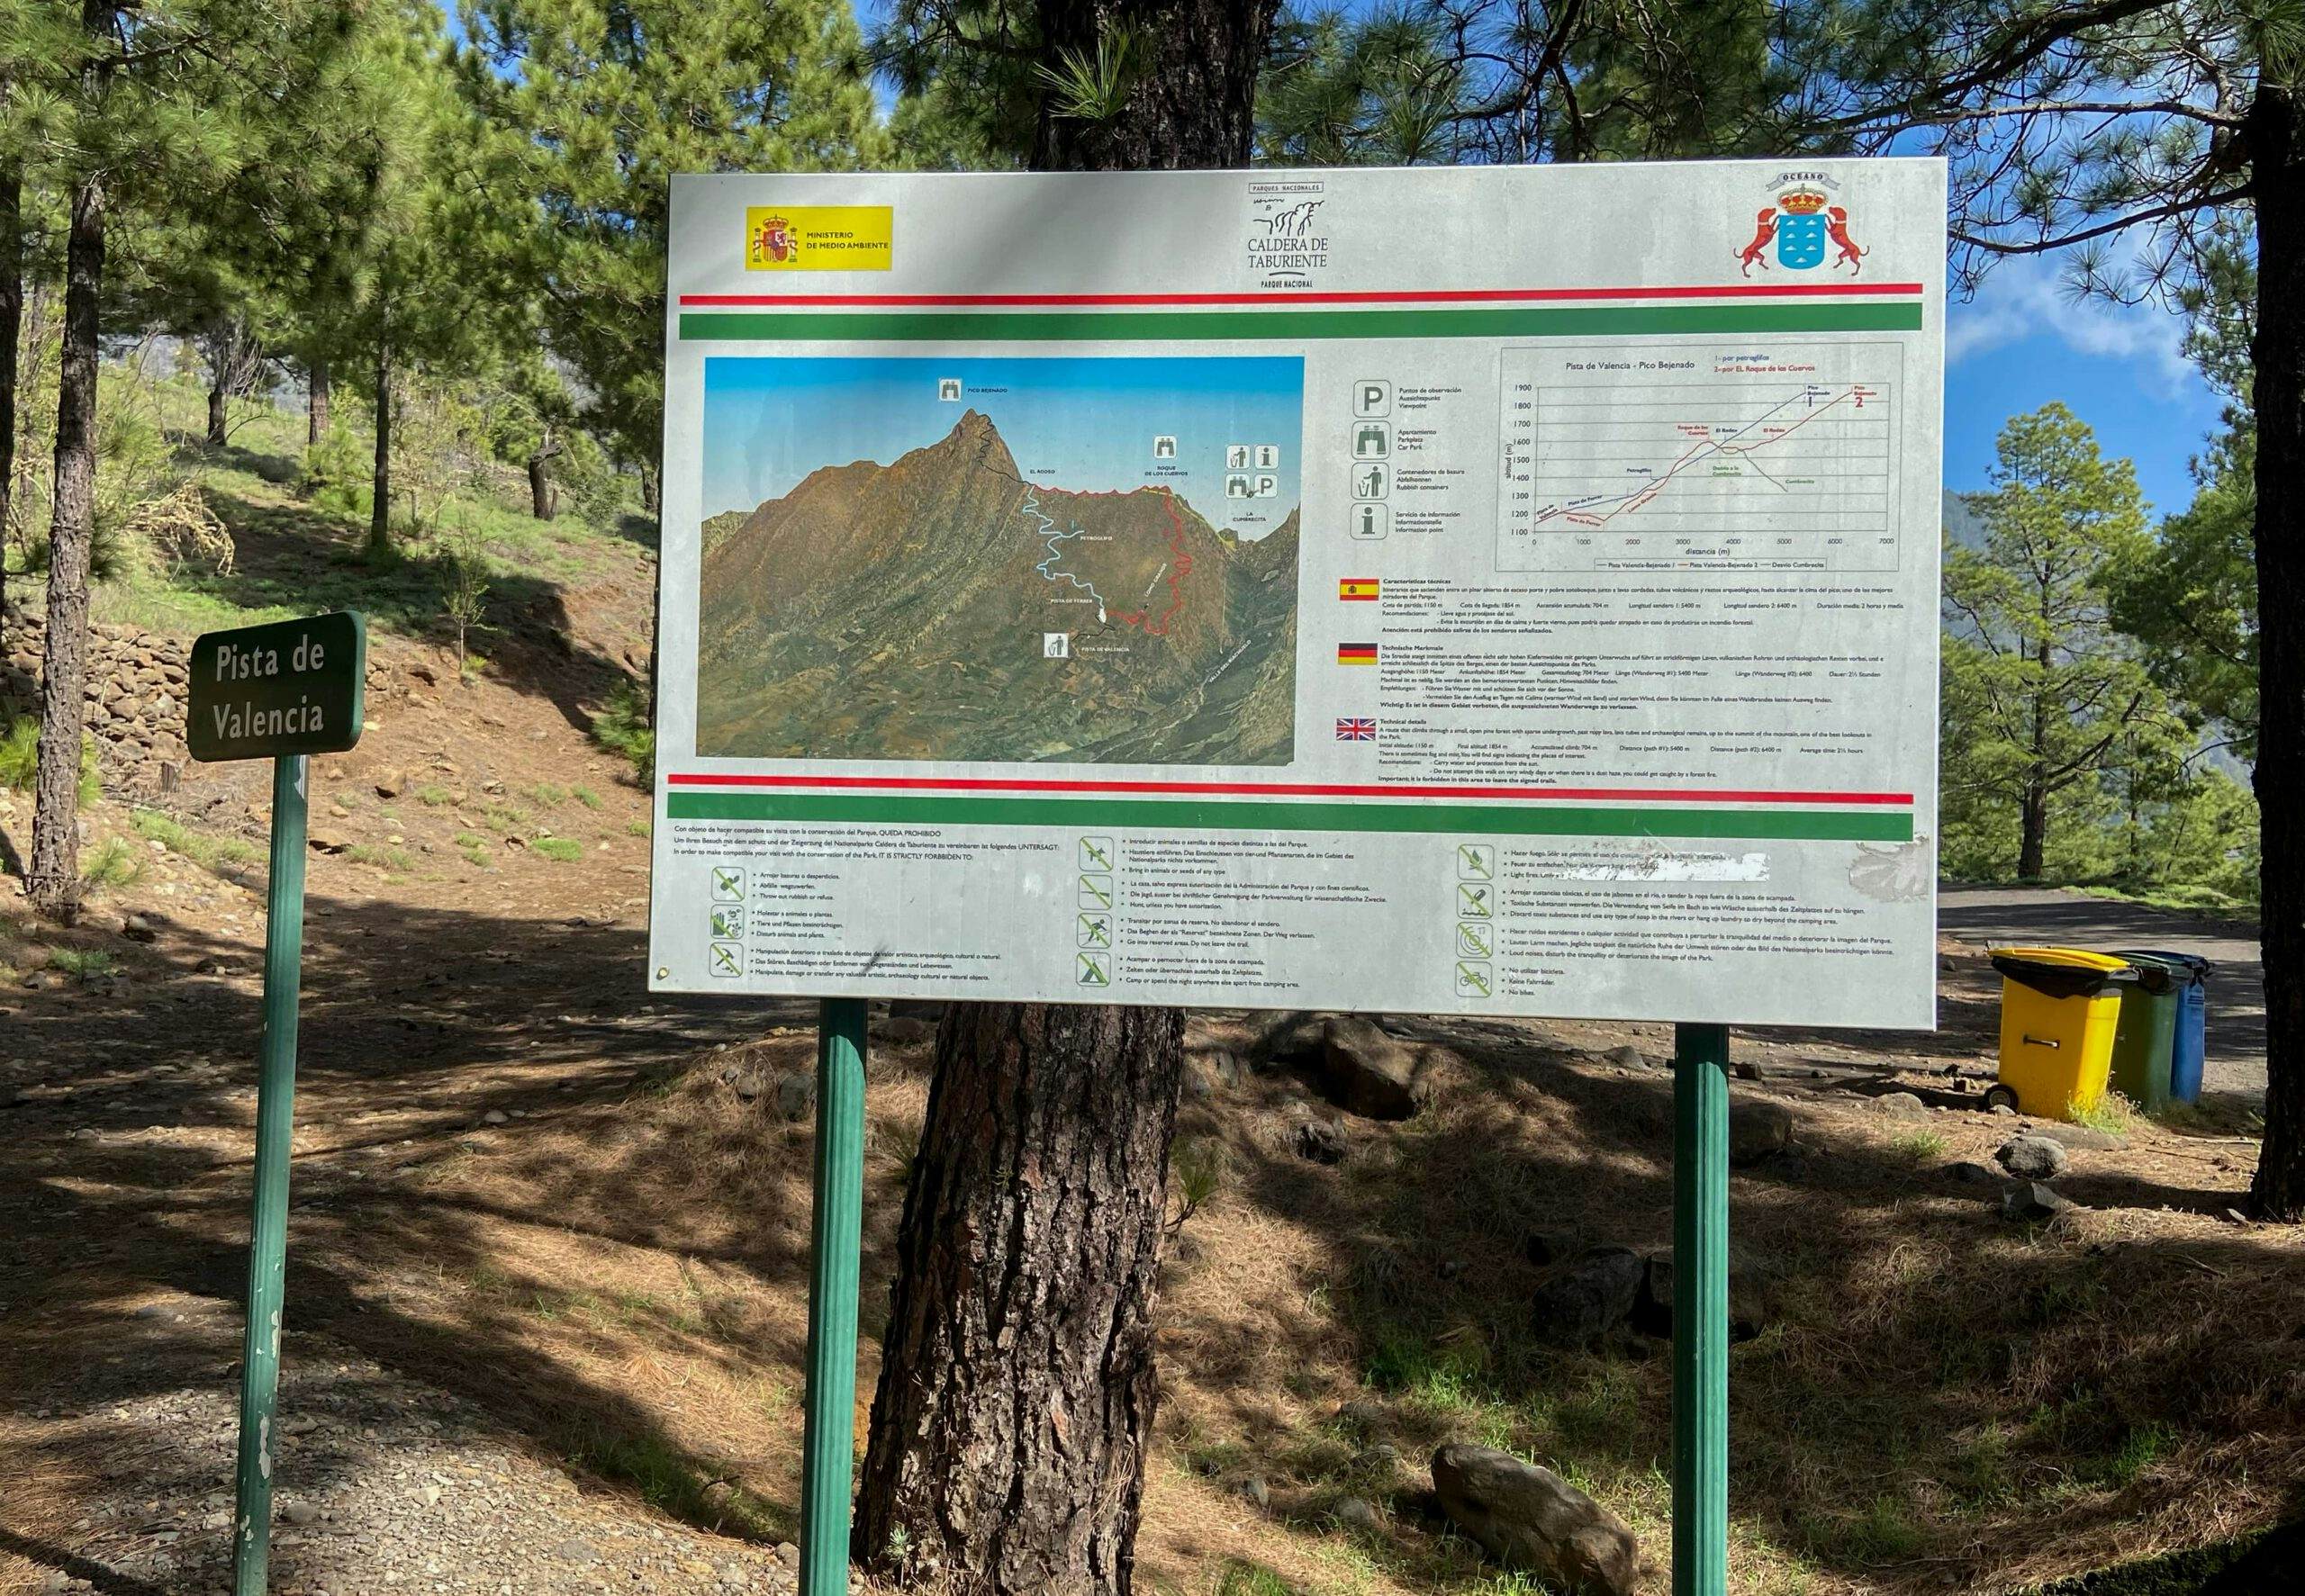 Information board at the Pista de Valencia